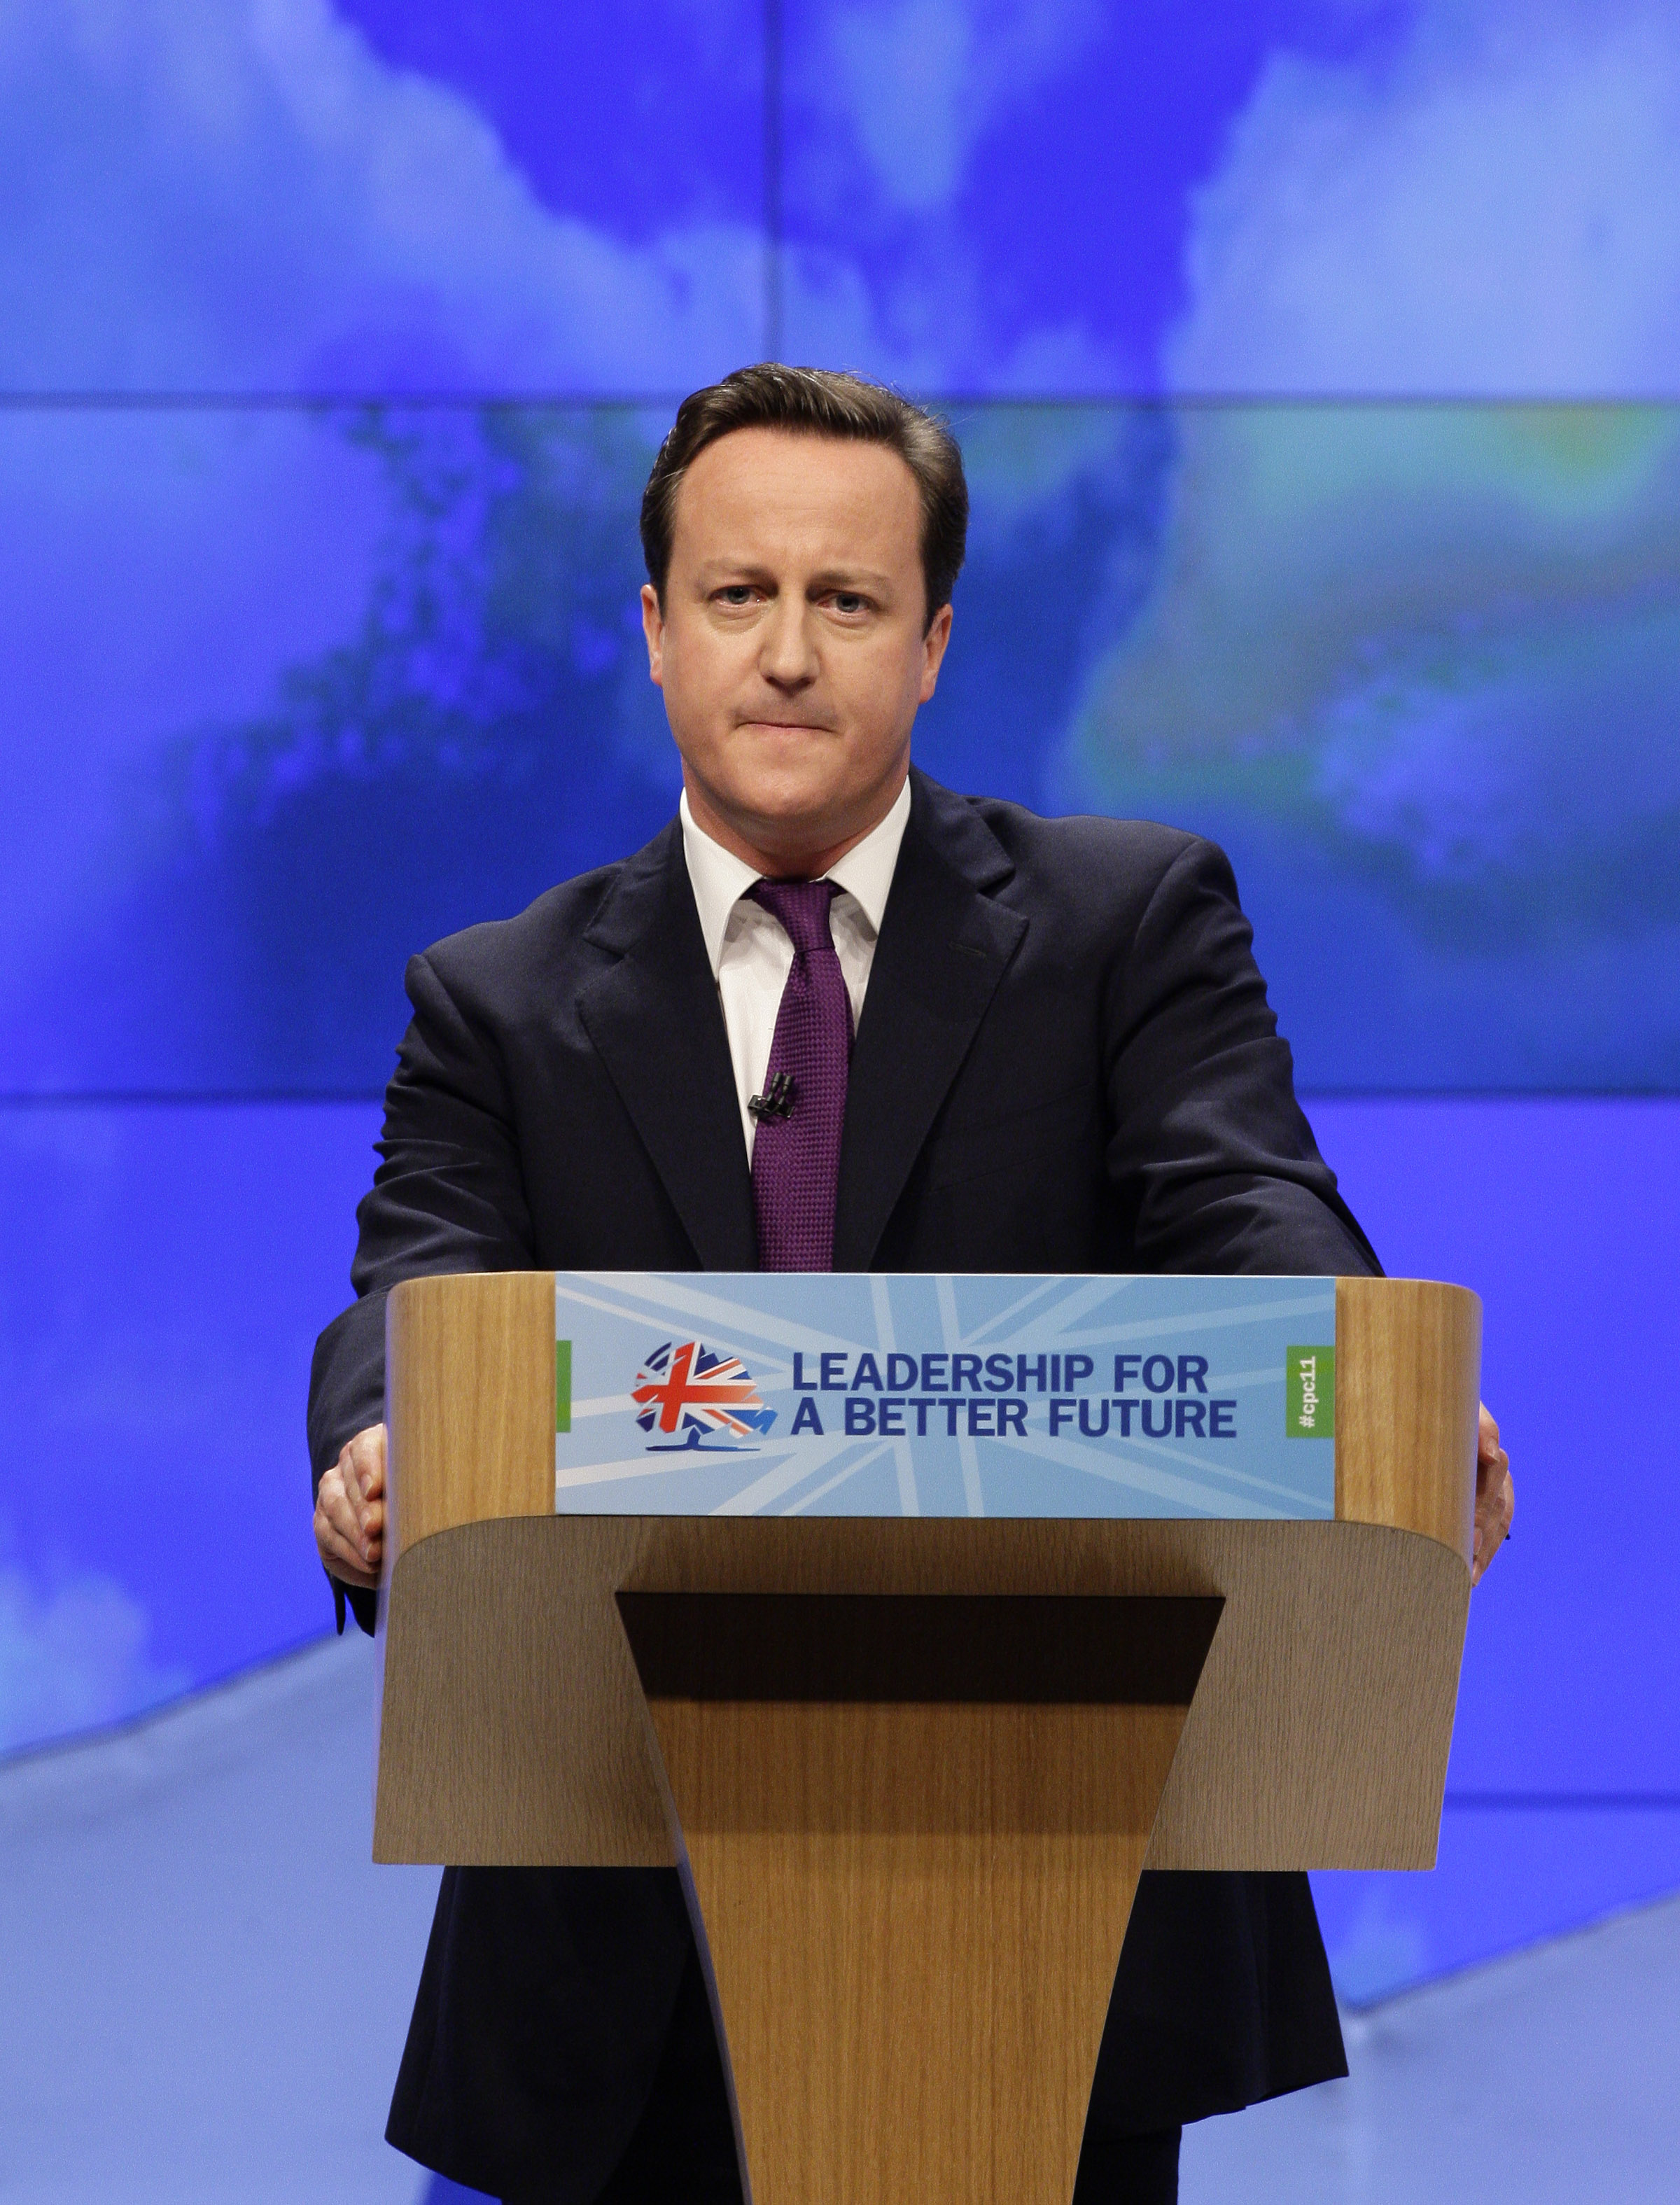 Storbritannien, England, Lagar, Invandring, David Cameron